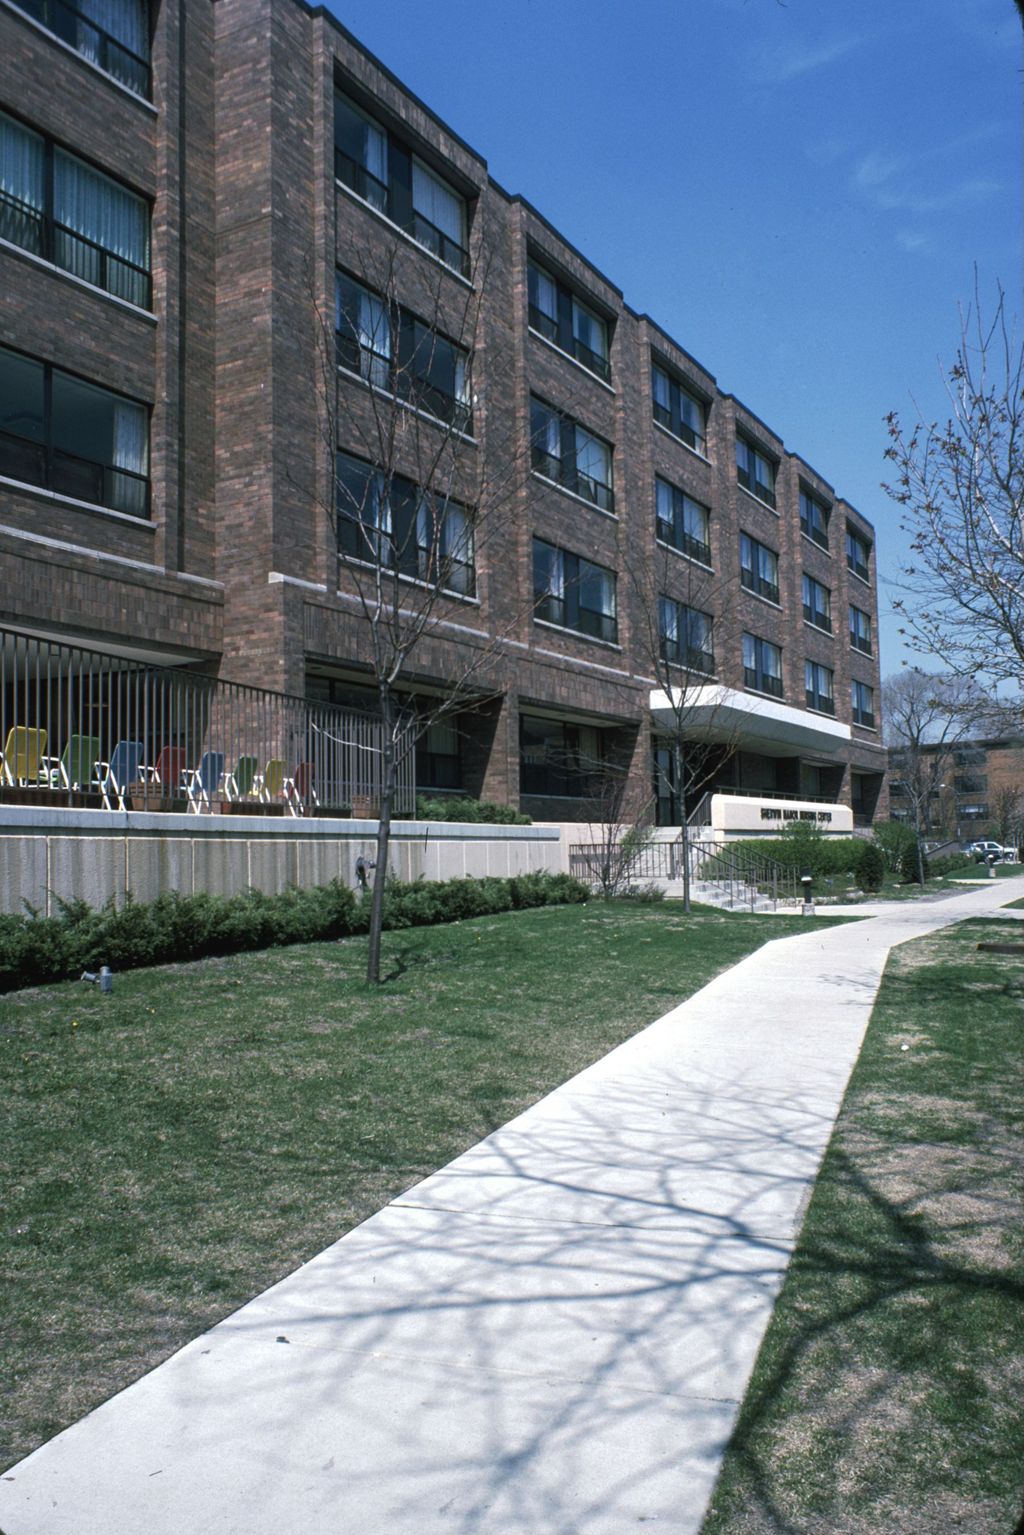 Sherwin Manor Nursing Center, Rogers Park